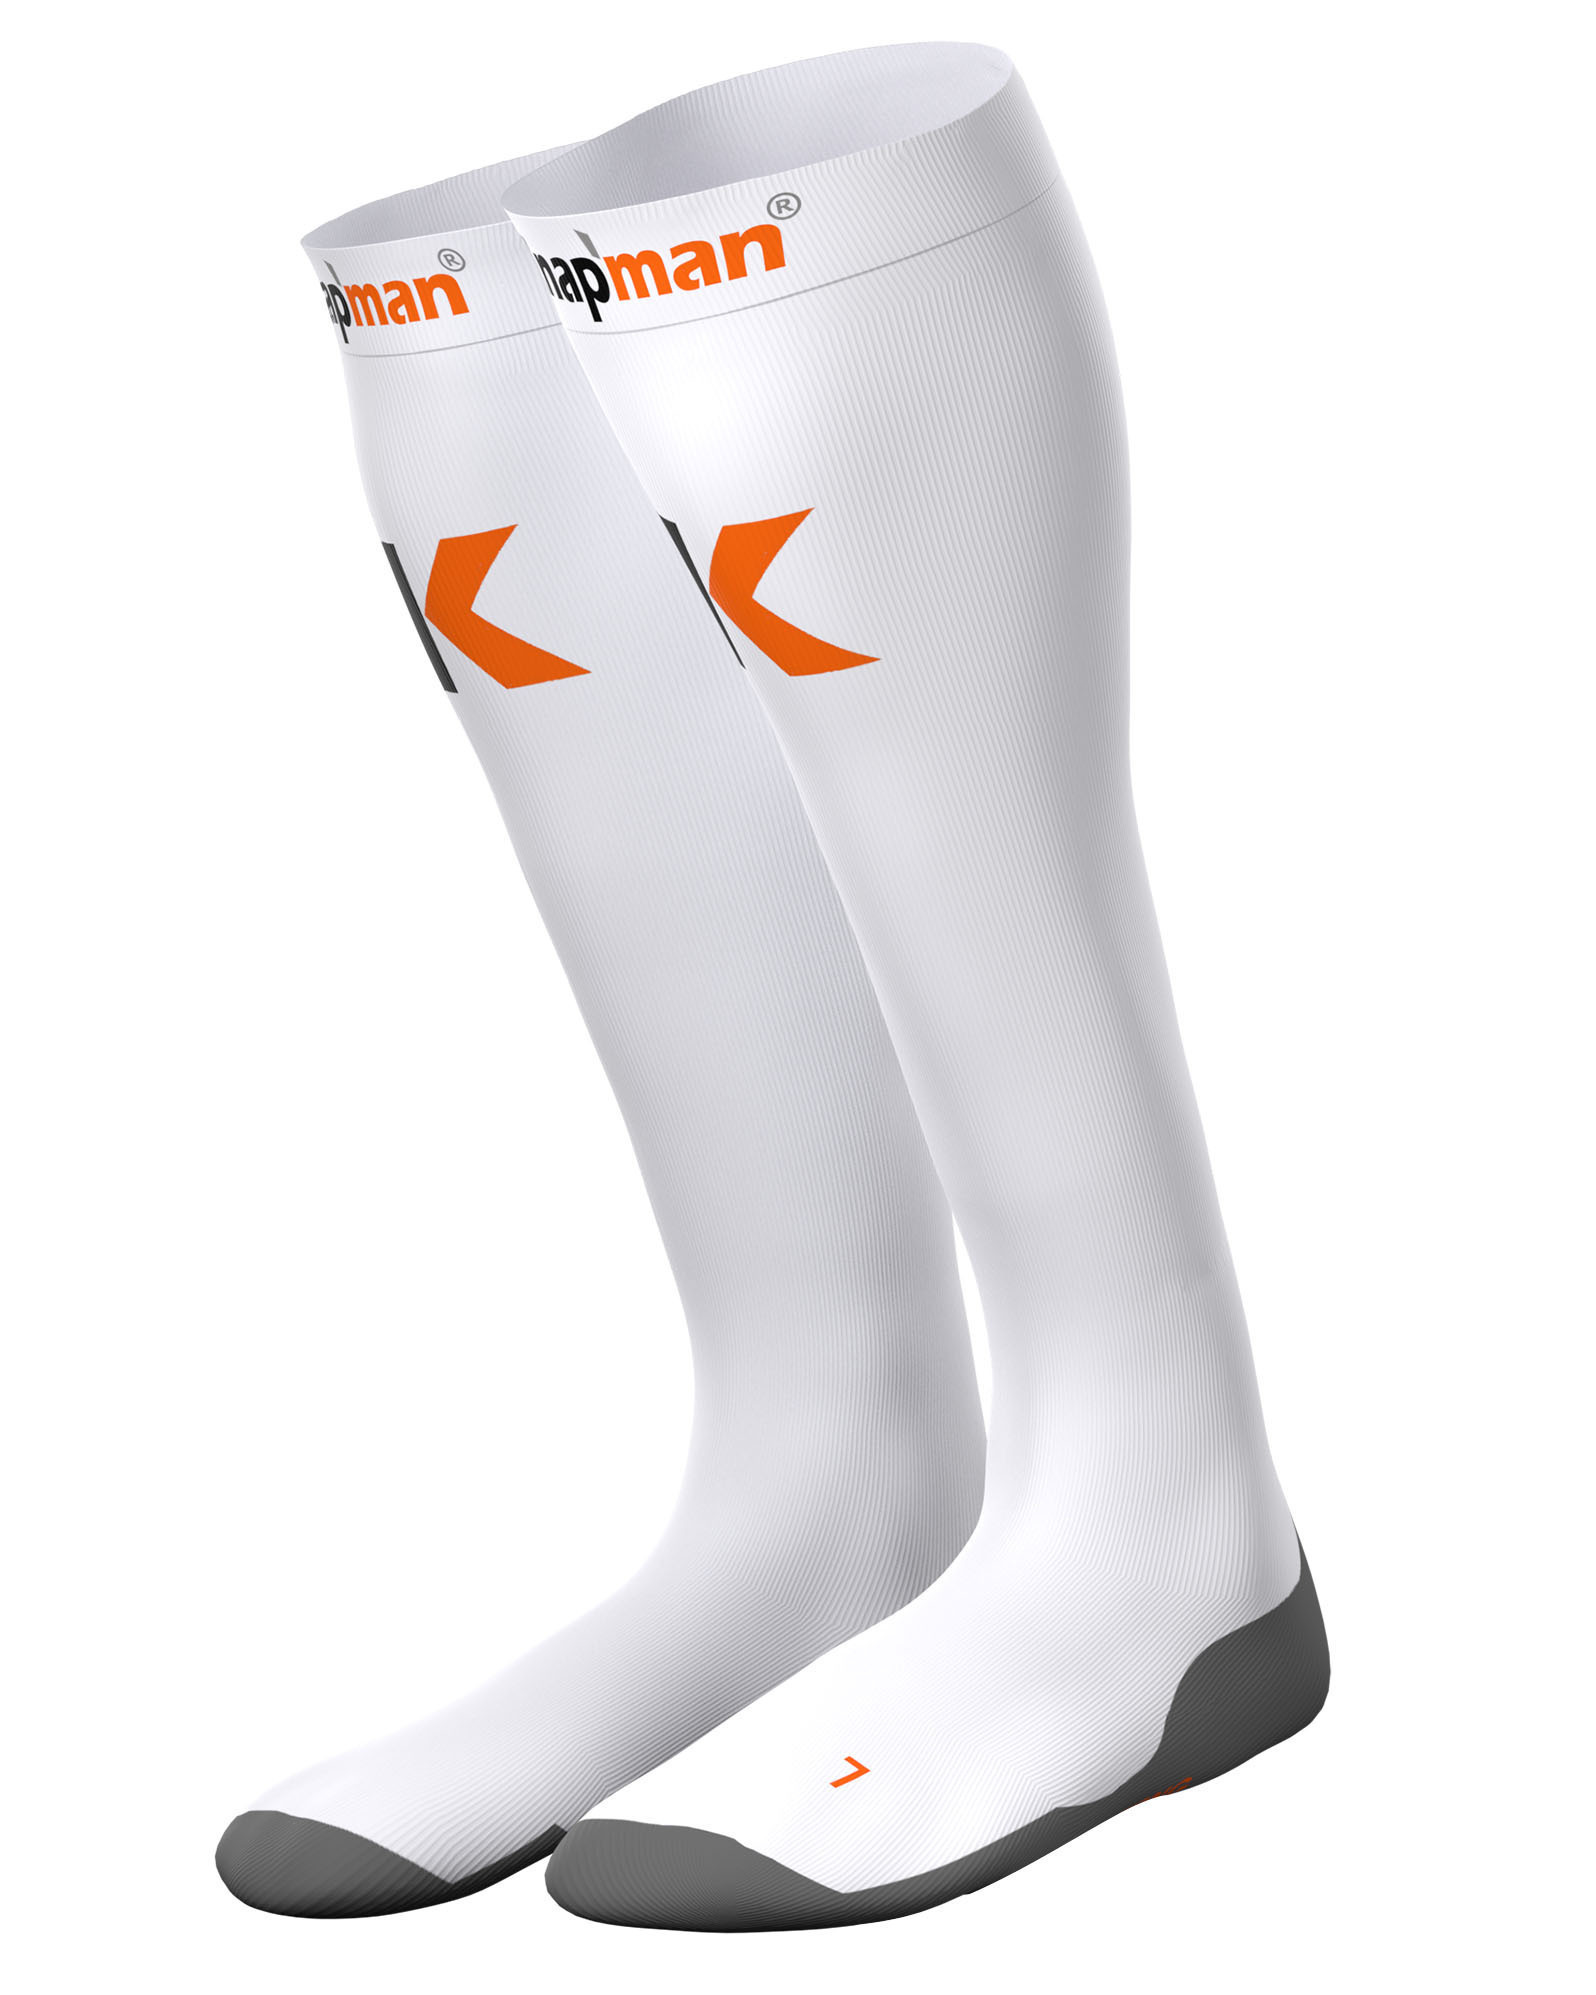 Knapman Ultra Strong Compression Socks White